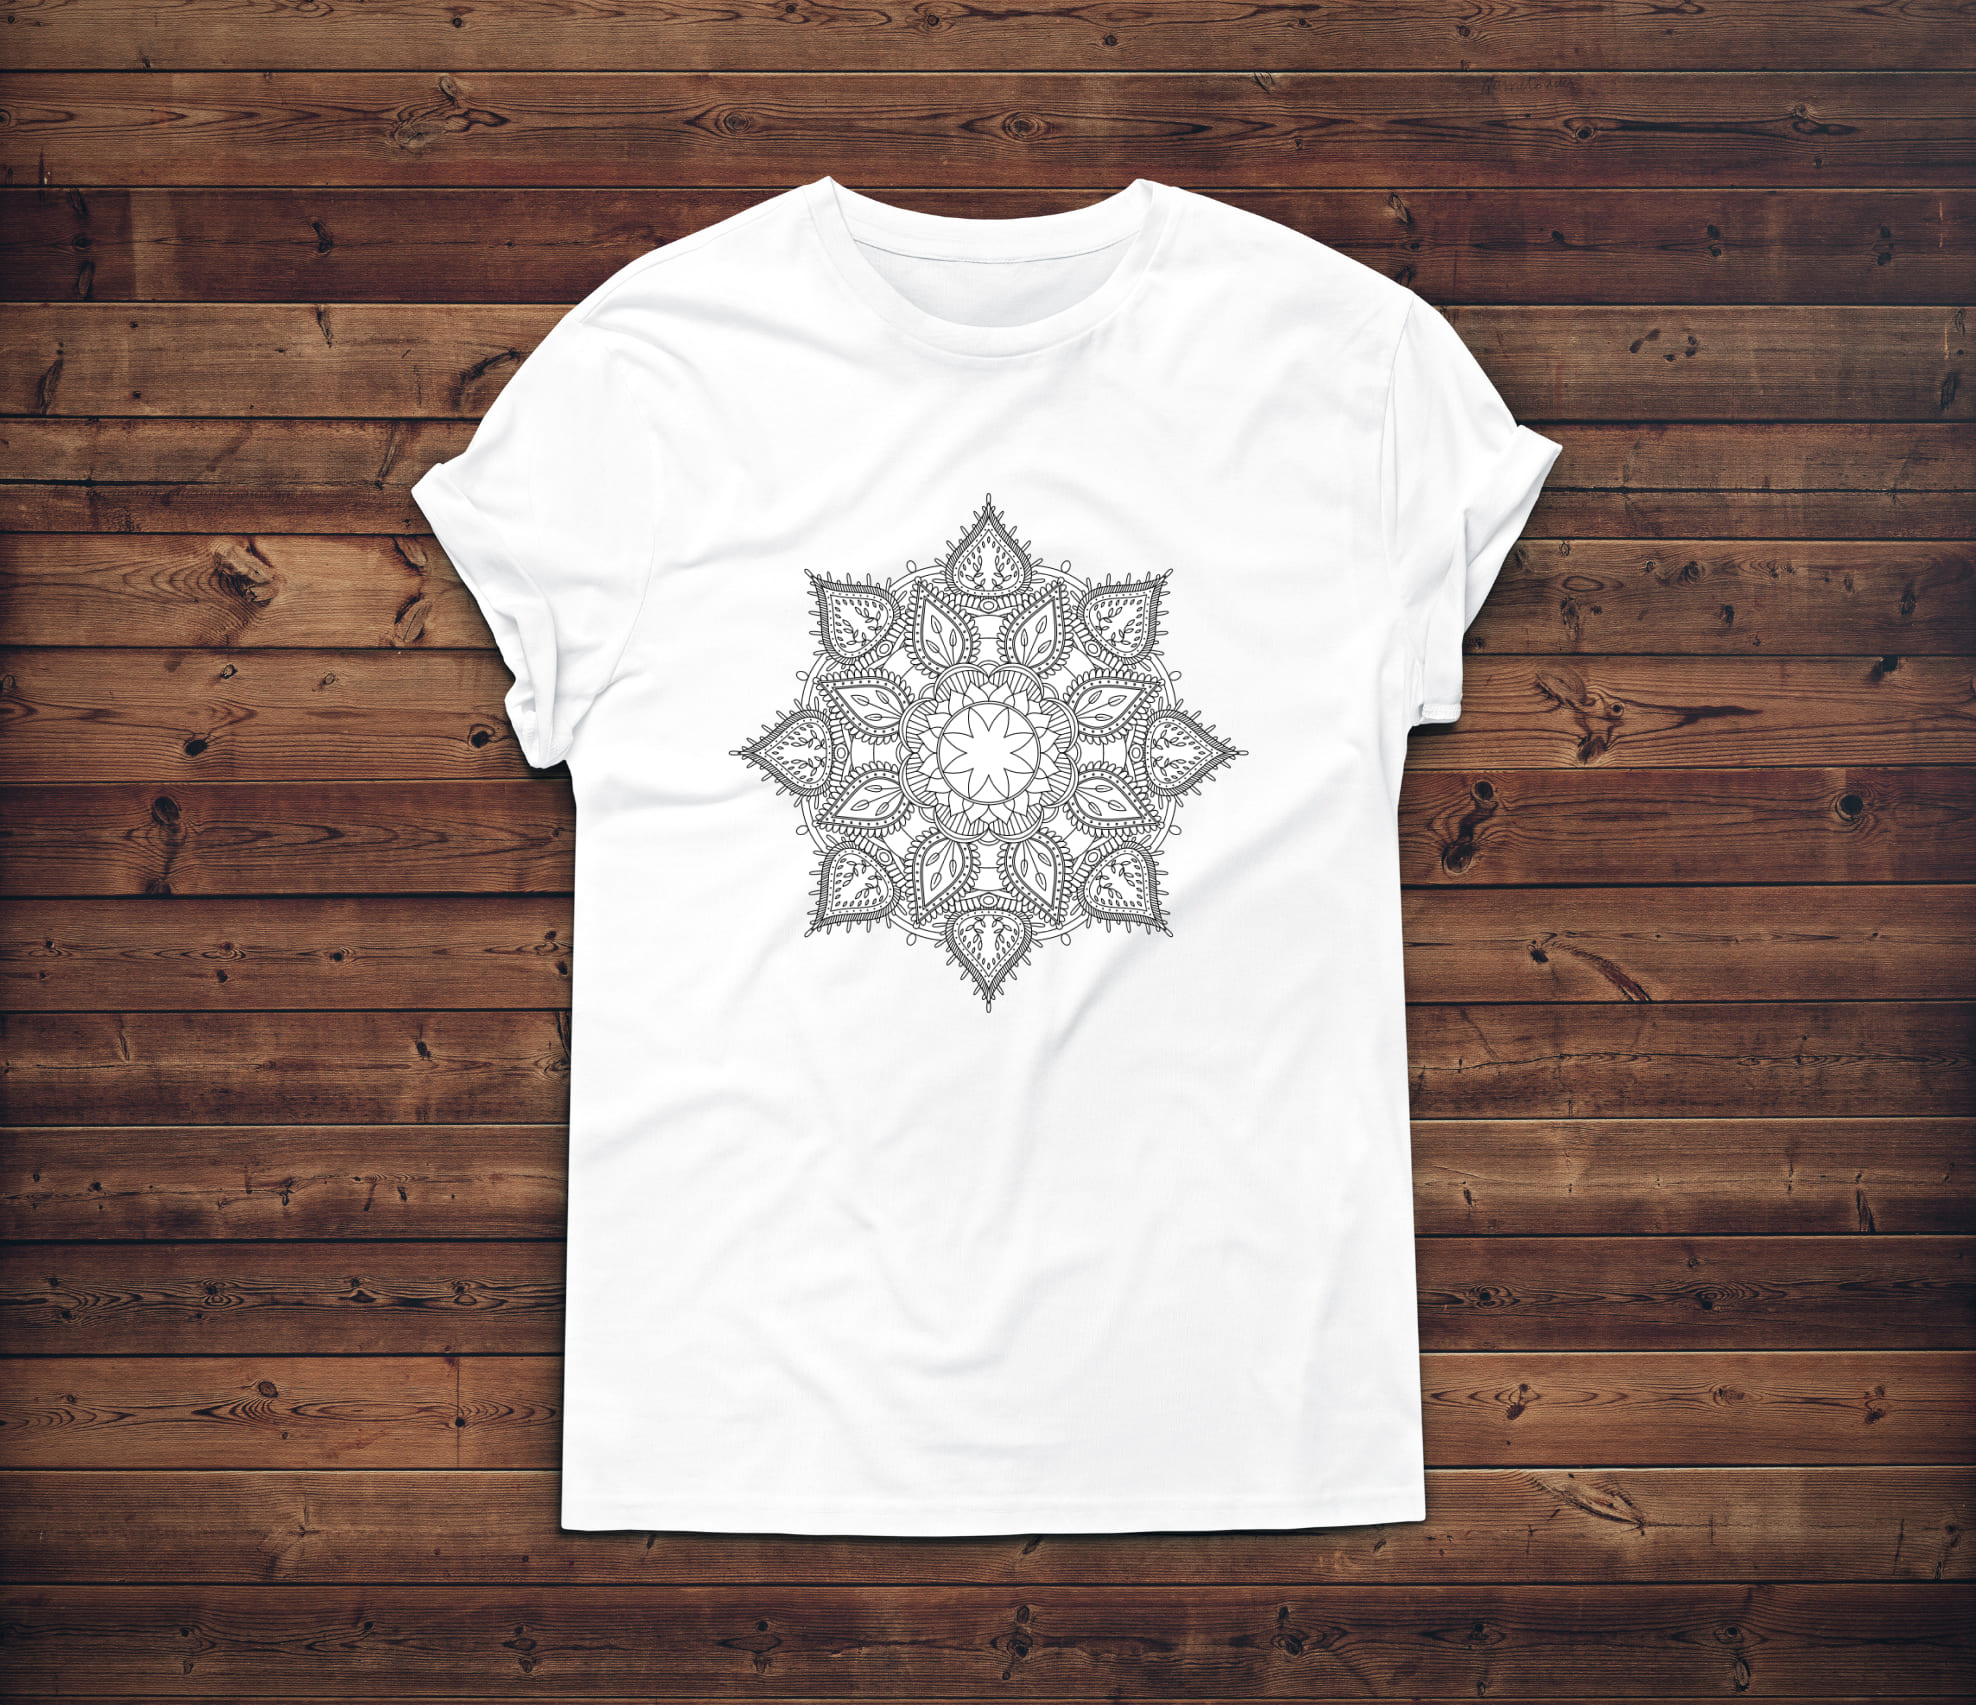 Beautiful mandala in a geometric shape on the white t-shirt.